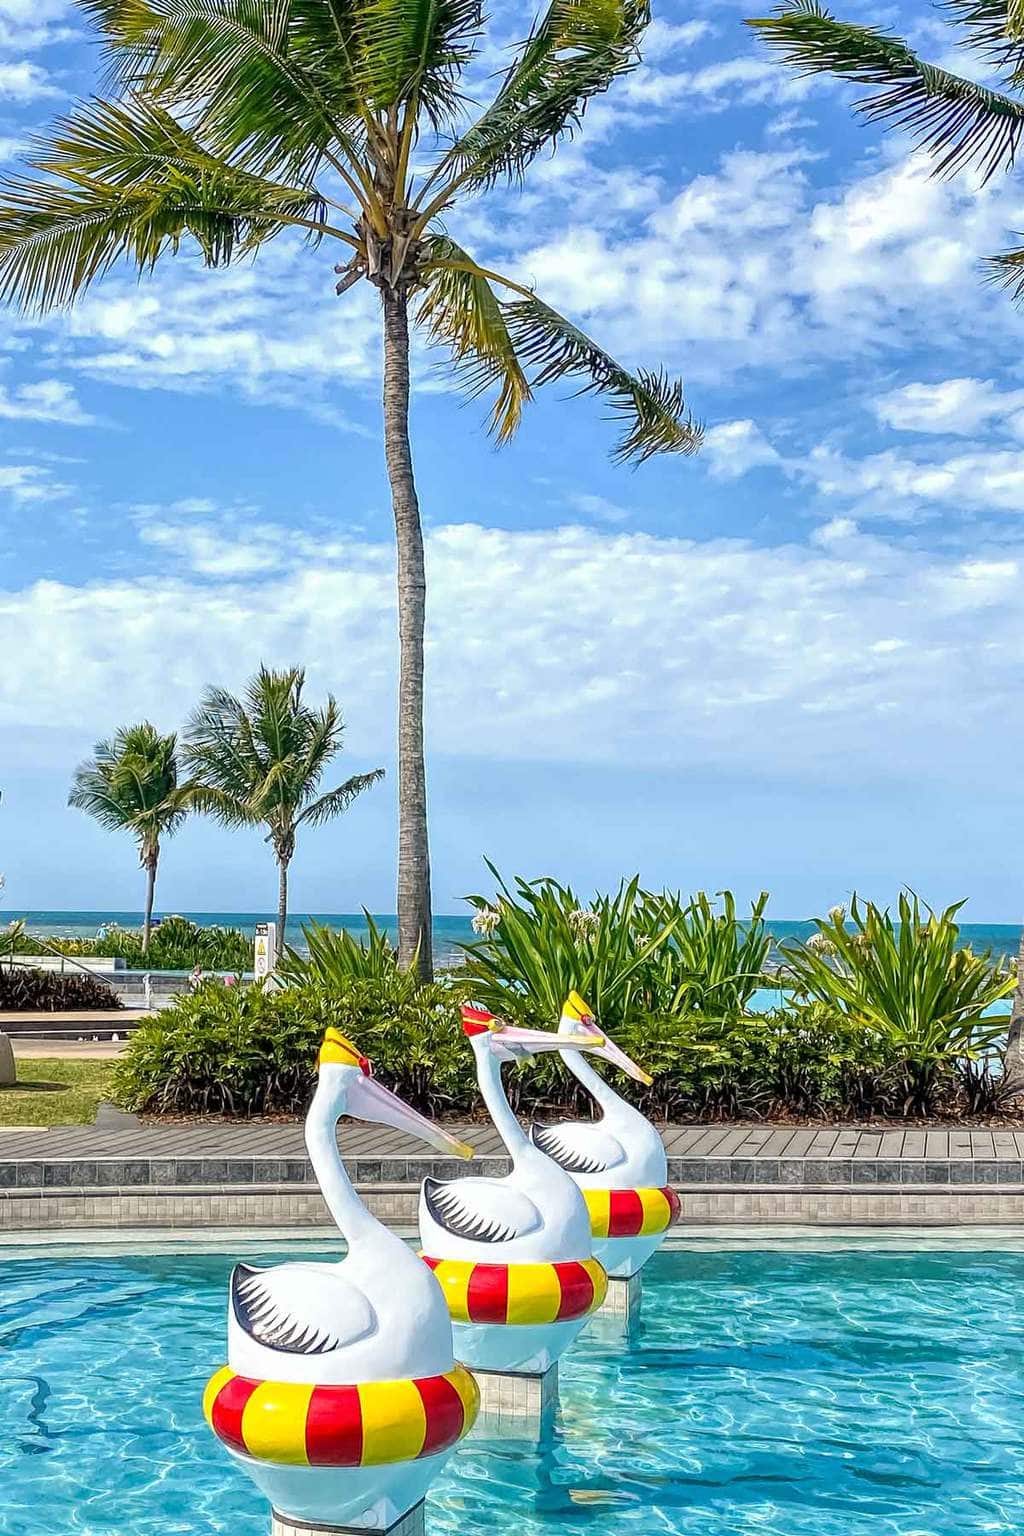 Pelican statues in Yeppoon Lagoon pool